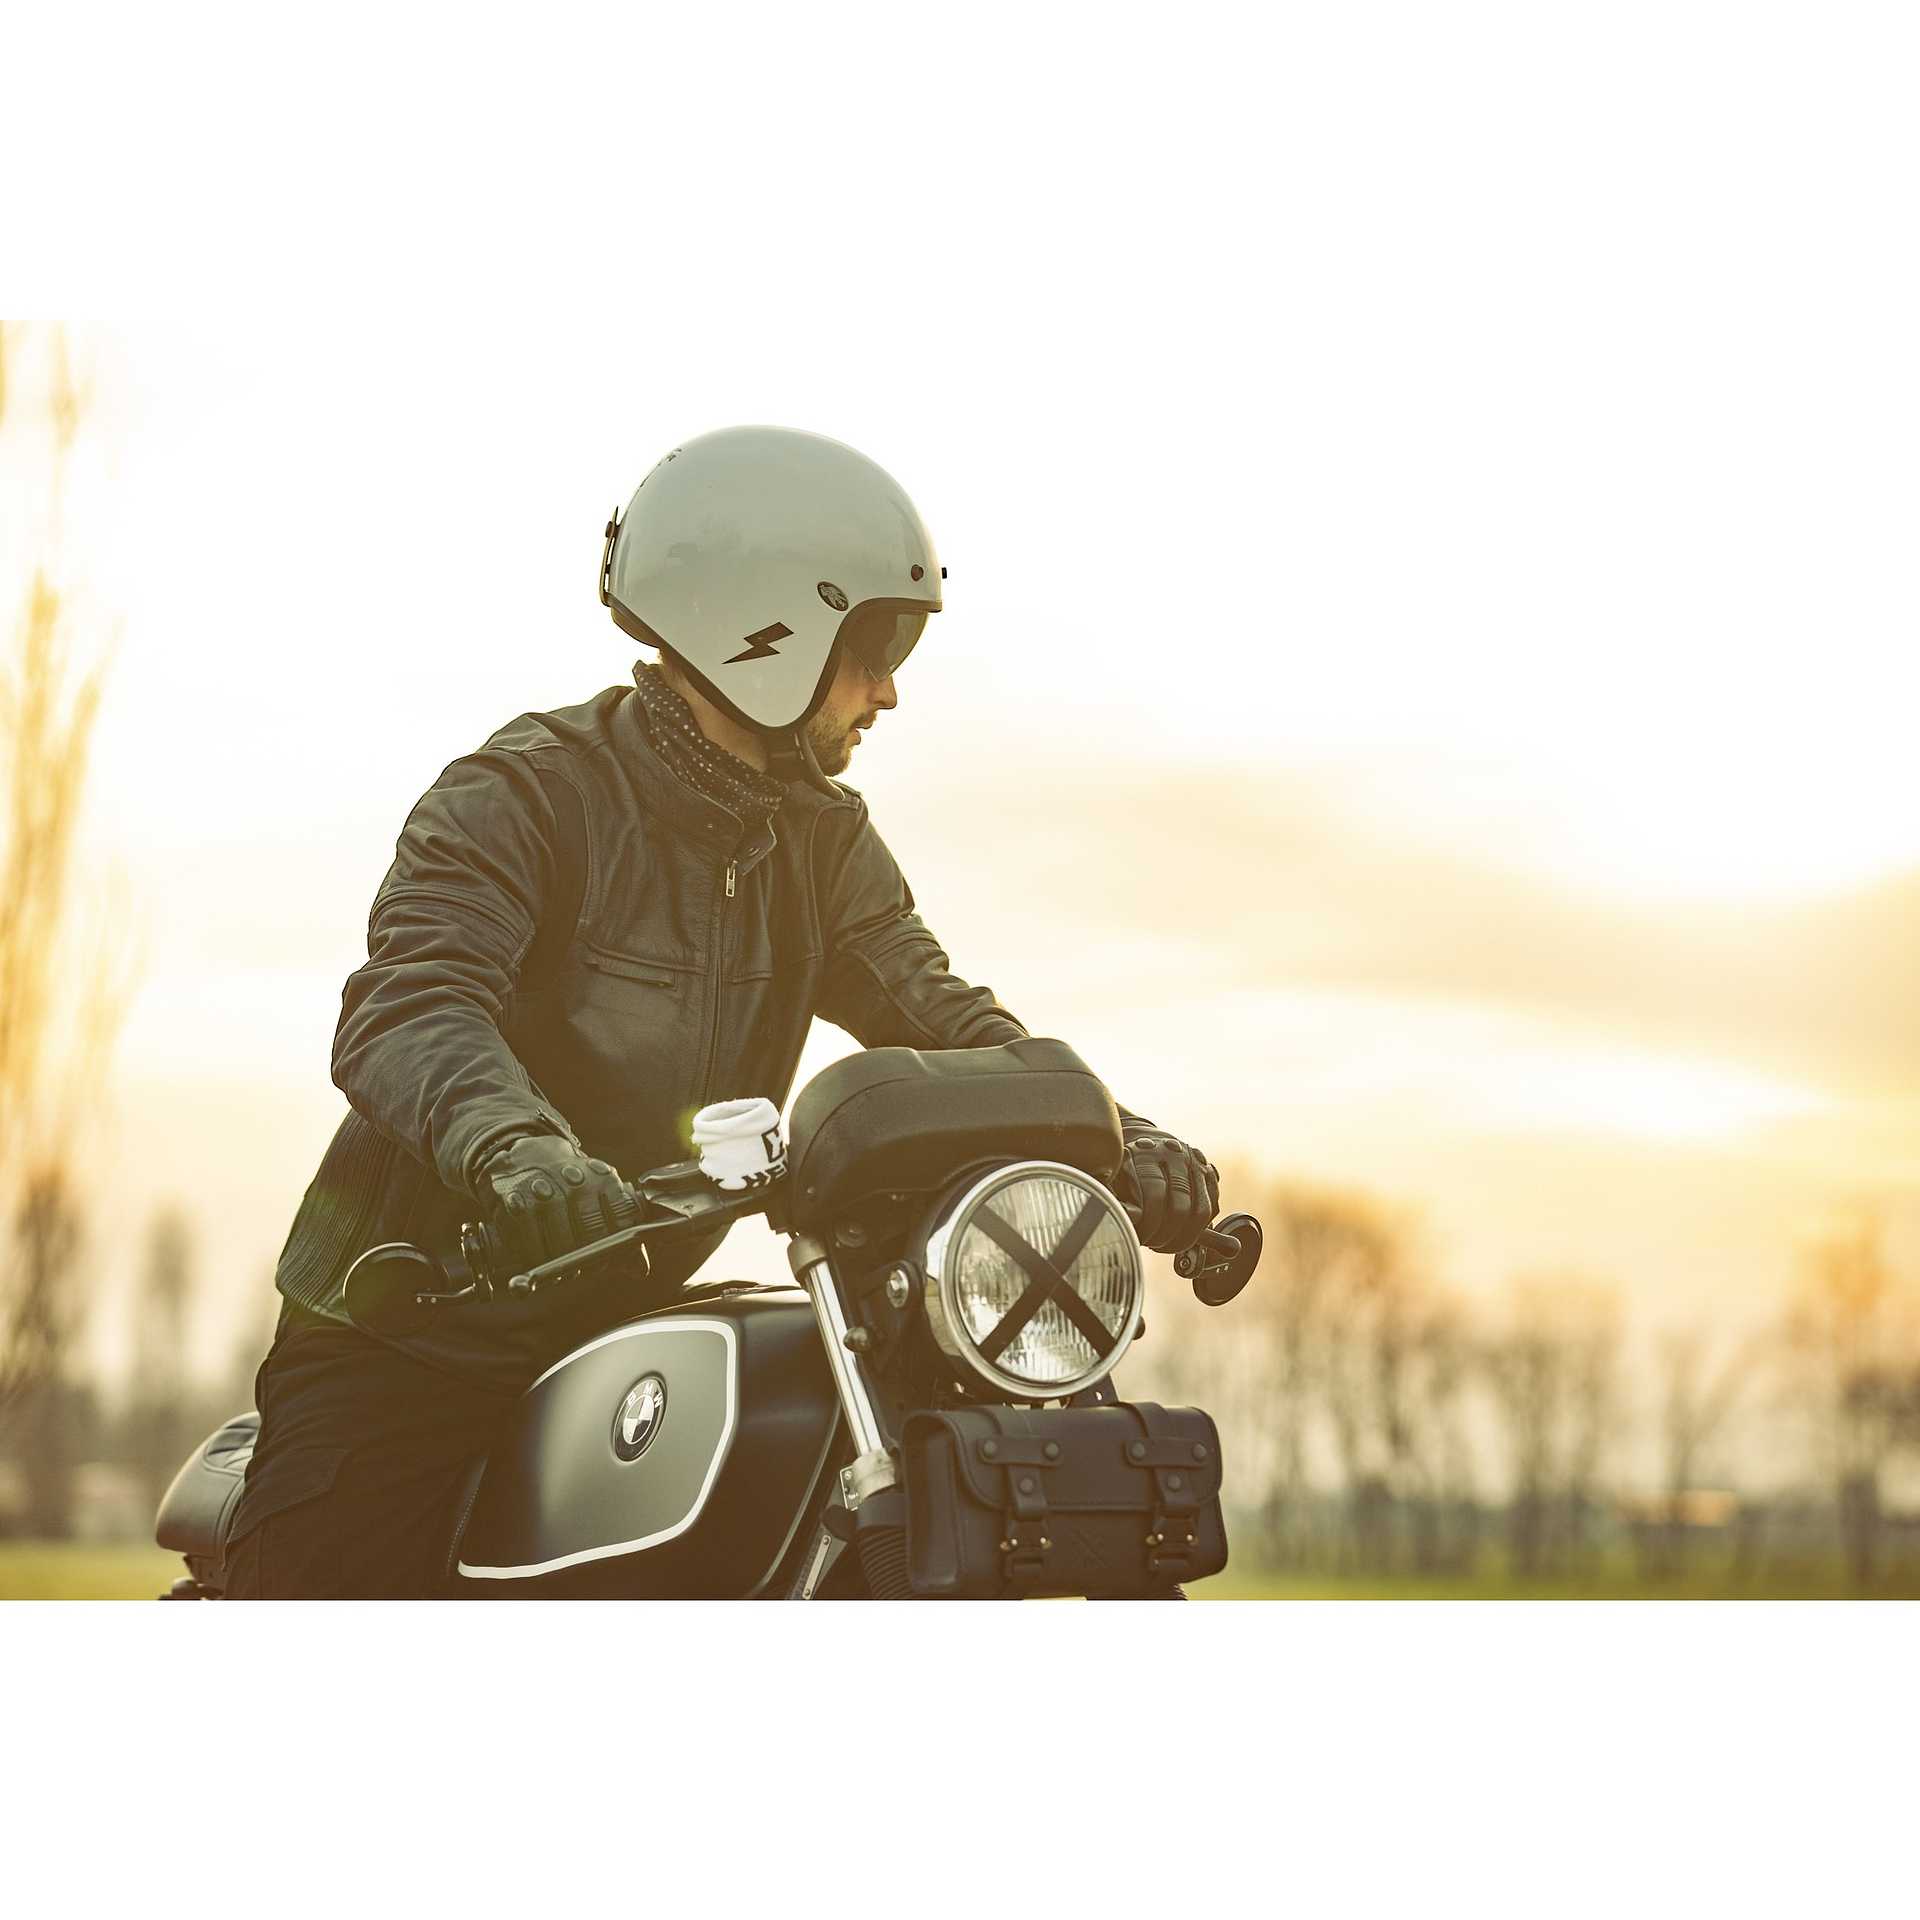 Protège-poitrine moto - Protection moto compacte et respirante